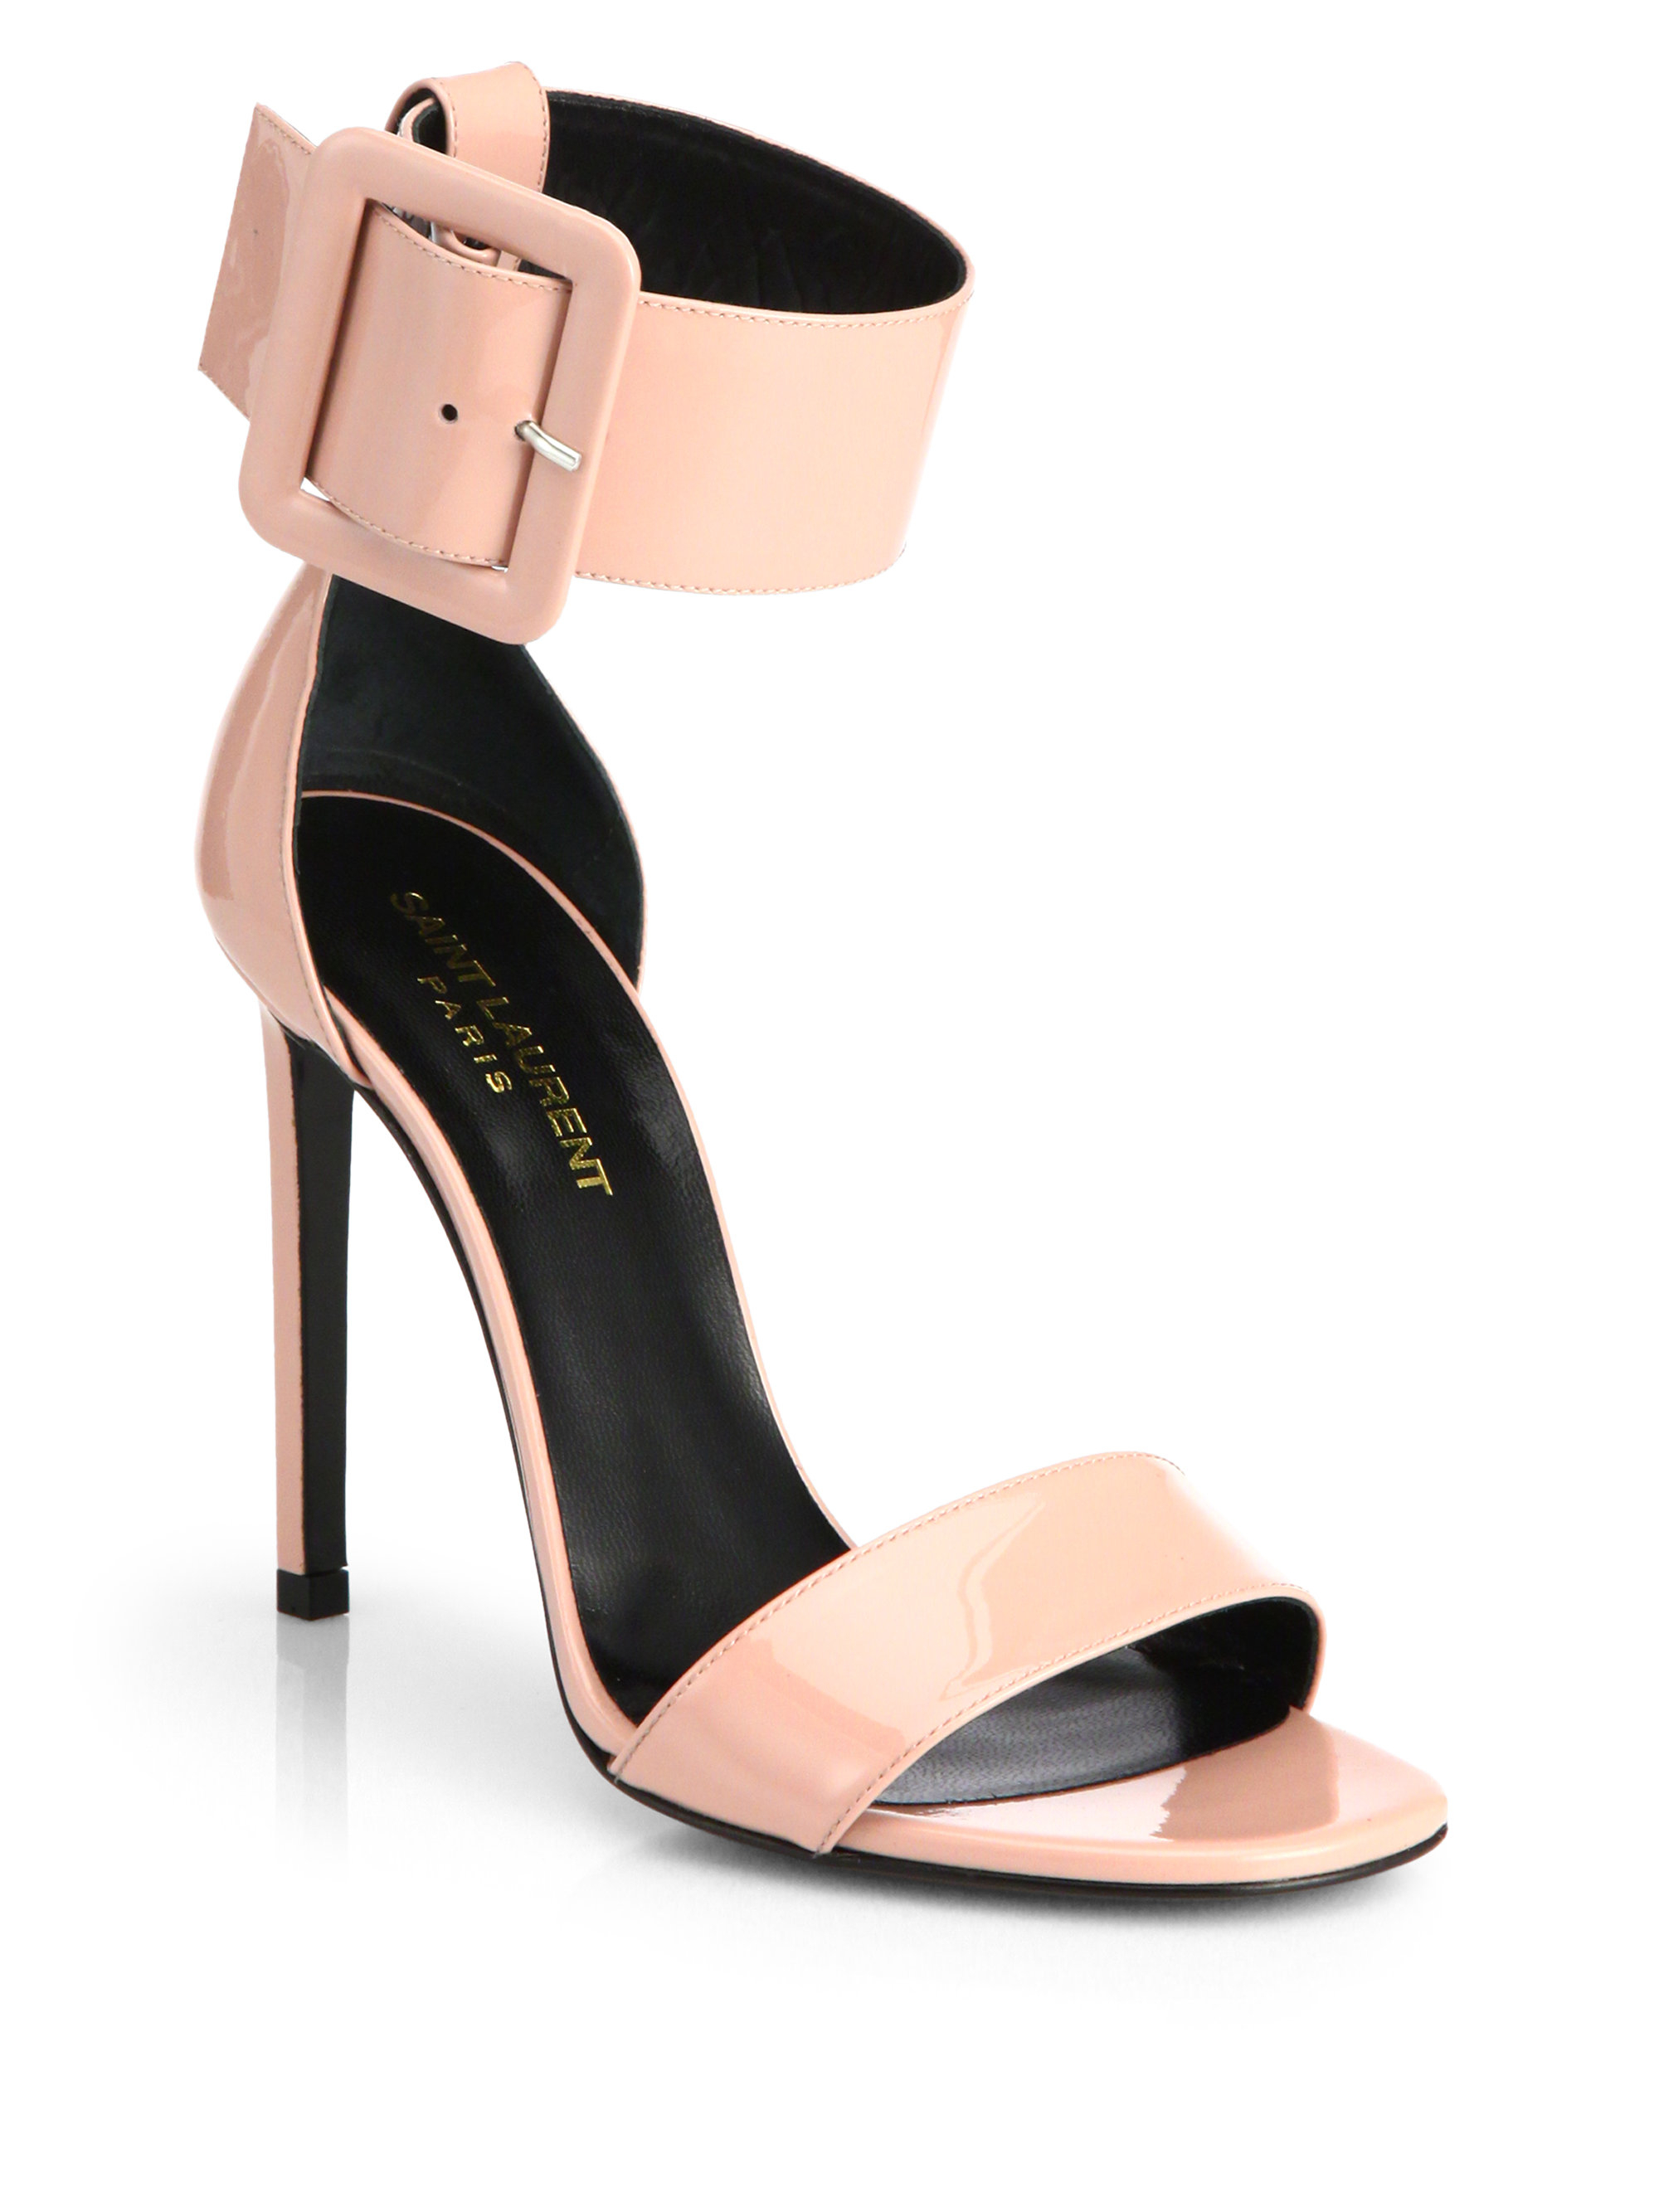 Lyst - Saint Laurent Jane Patent Leather Sandals in Pink